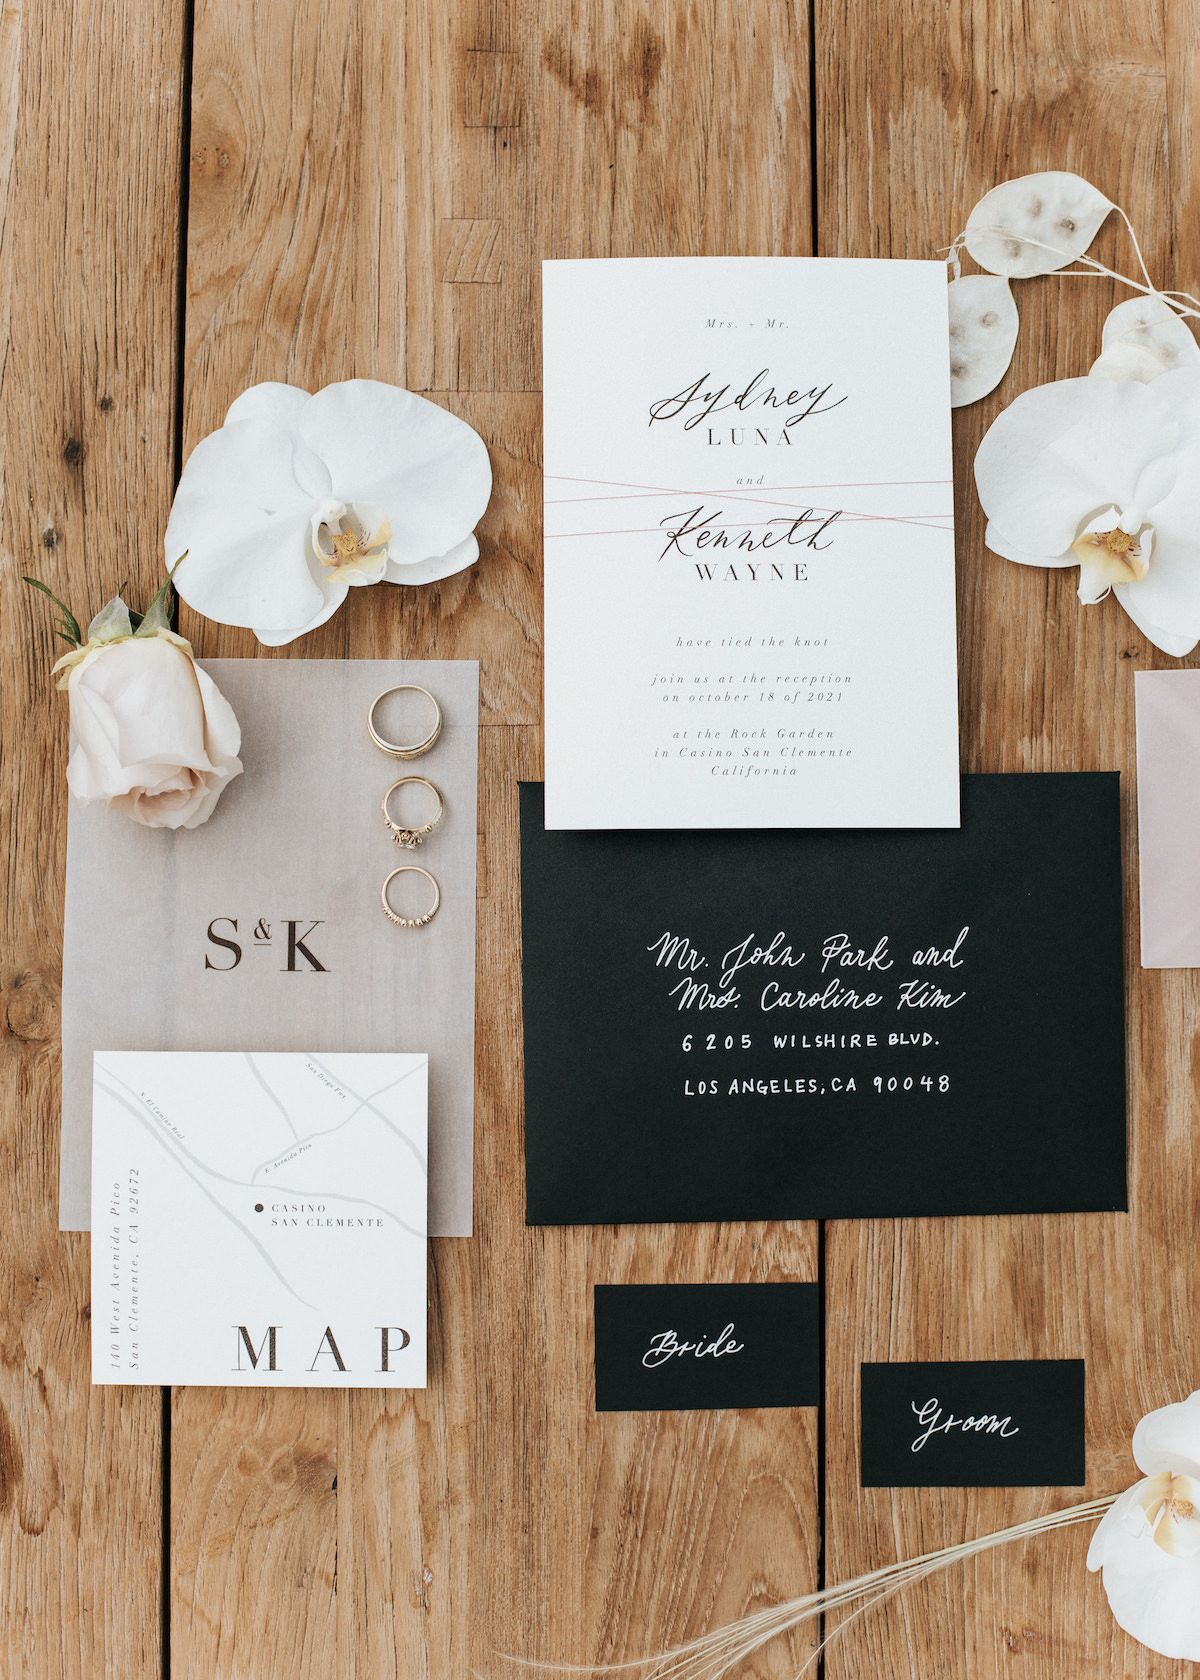 Modern black and white wedding invitations - Sydney Bliss Photography